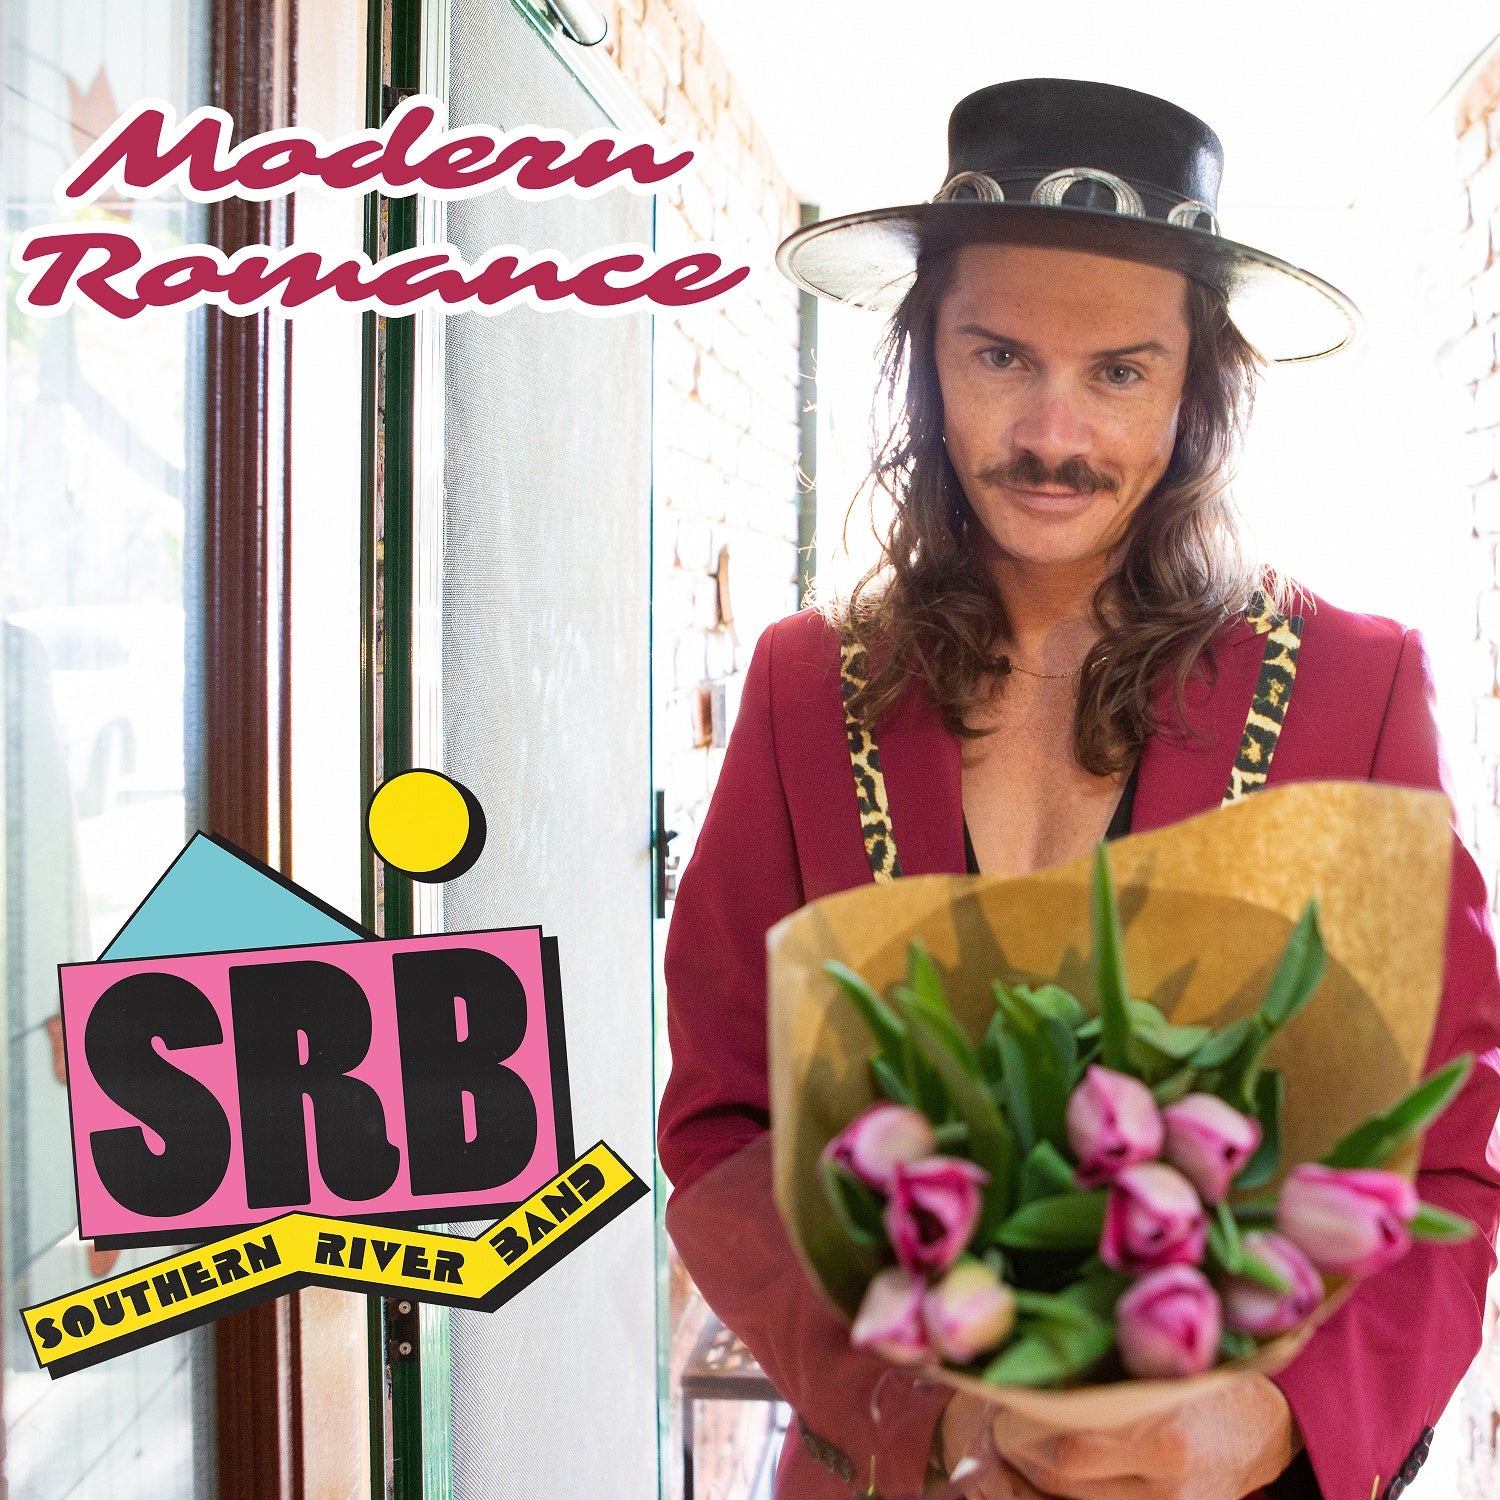 The Southern River Band - ‘Modern Romance’